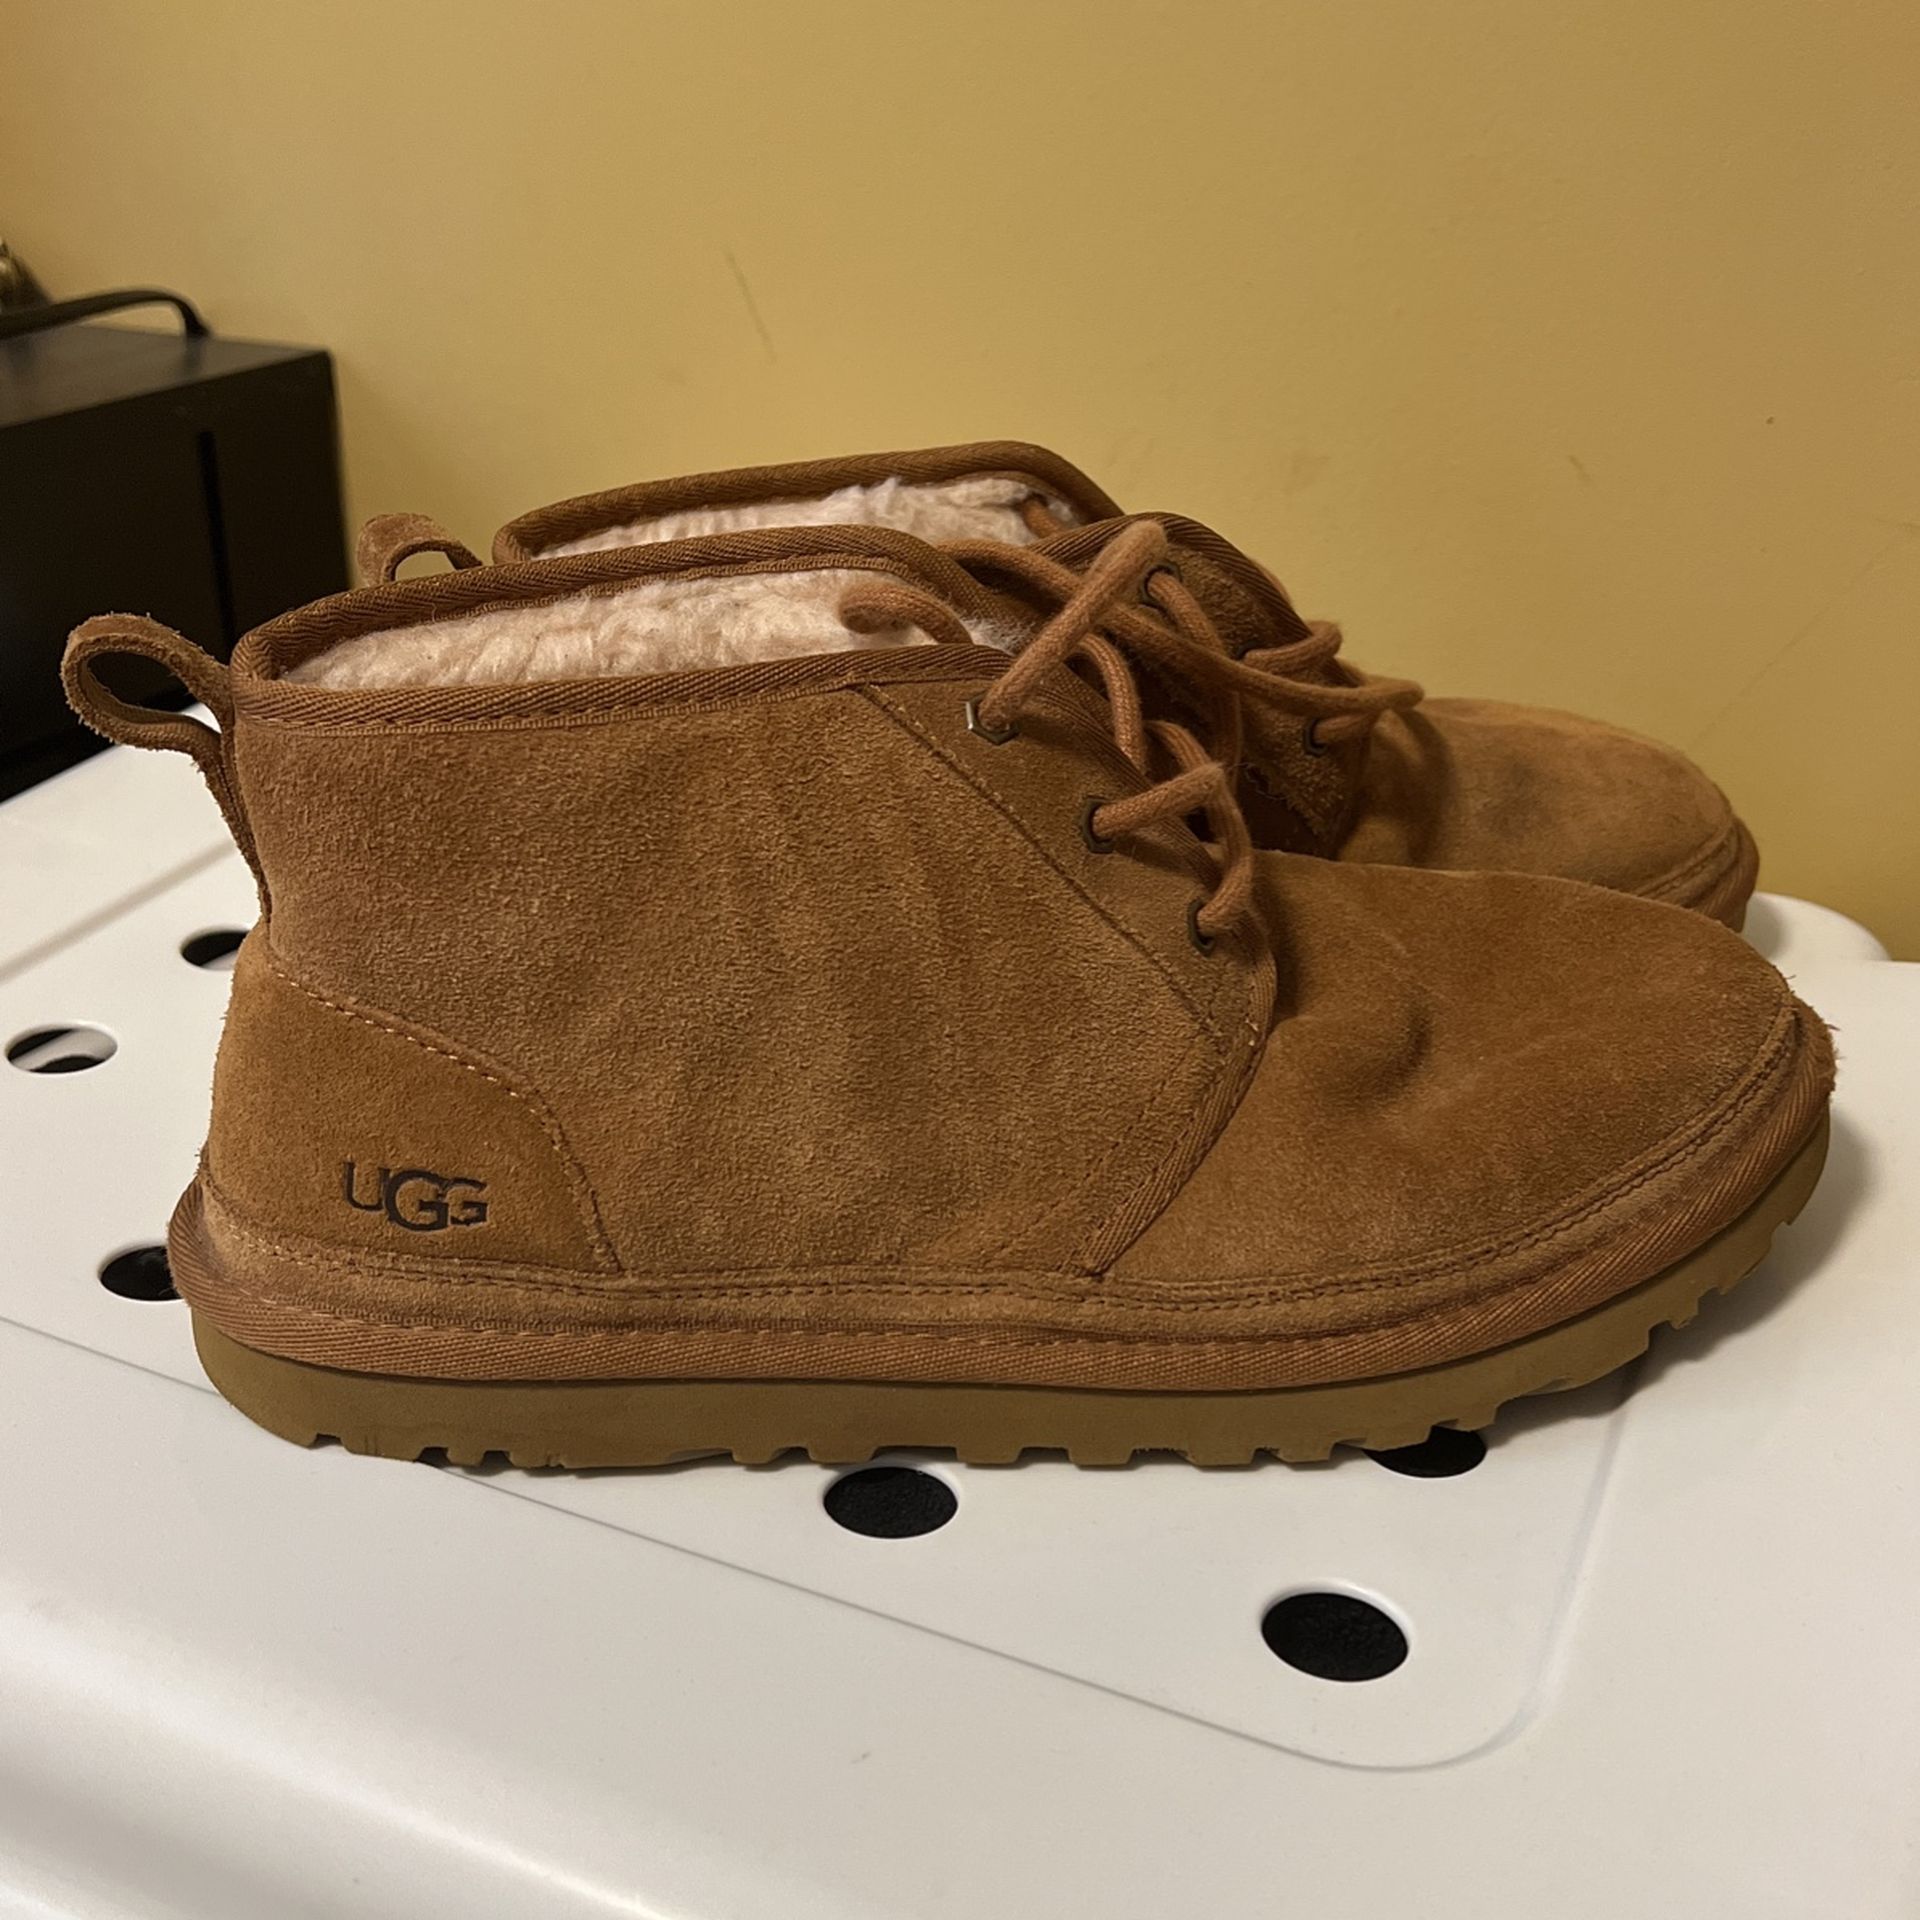 Men’s Ugg Boots